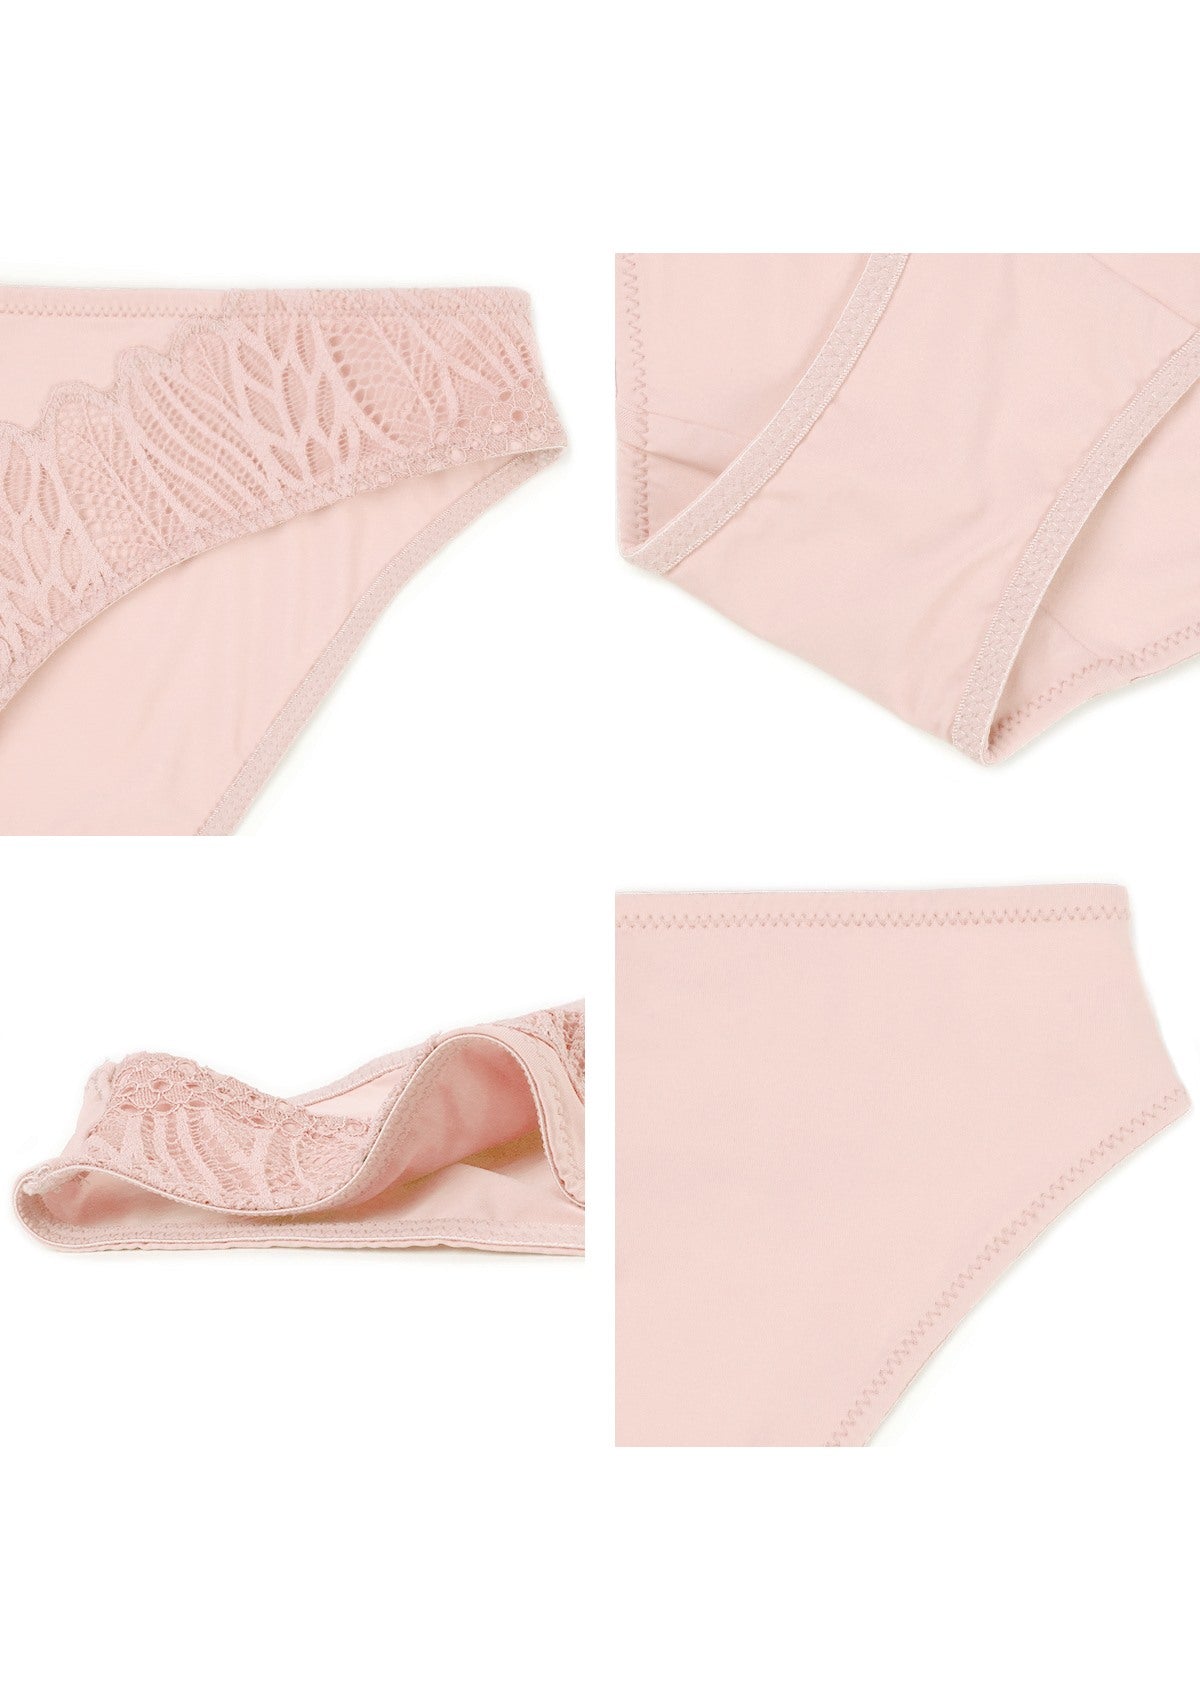 HSIA Pretty Secrets Cozy Stylish Lace Trim Feminine Modern Underwear - XXL / Light Pink